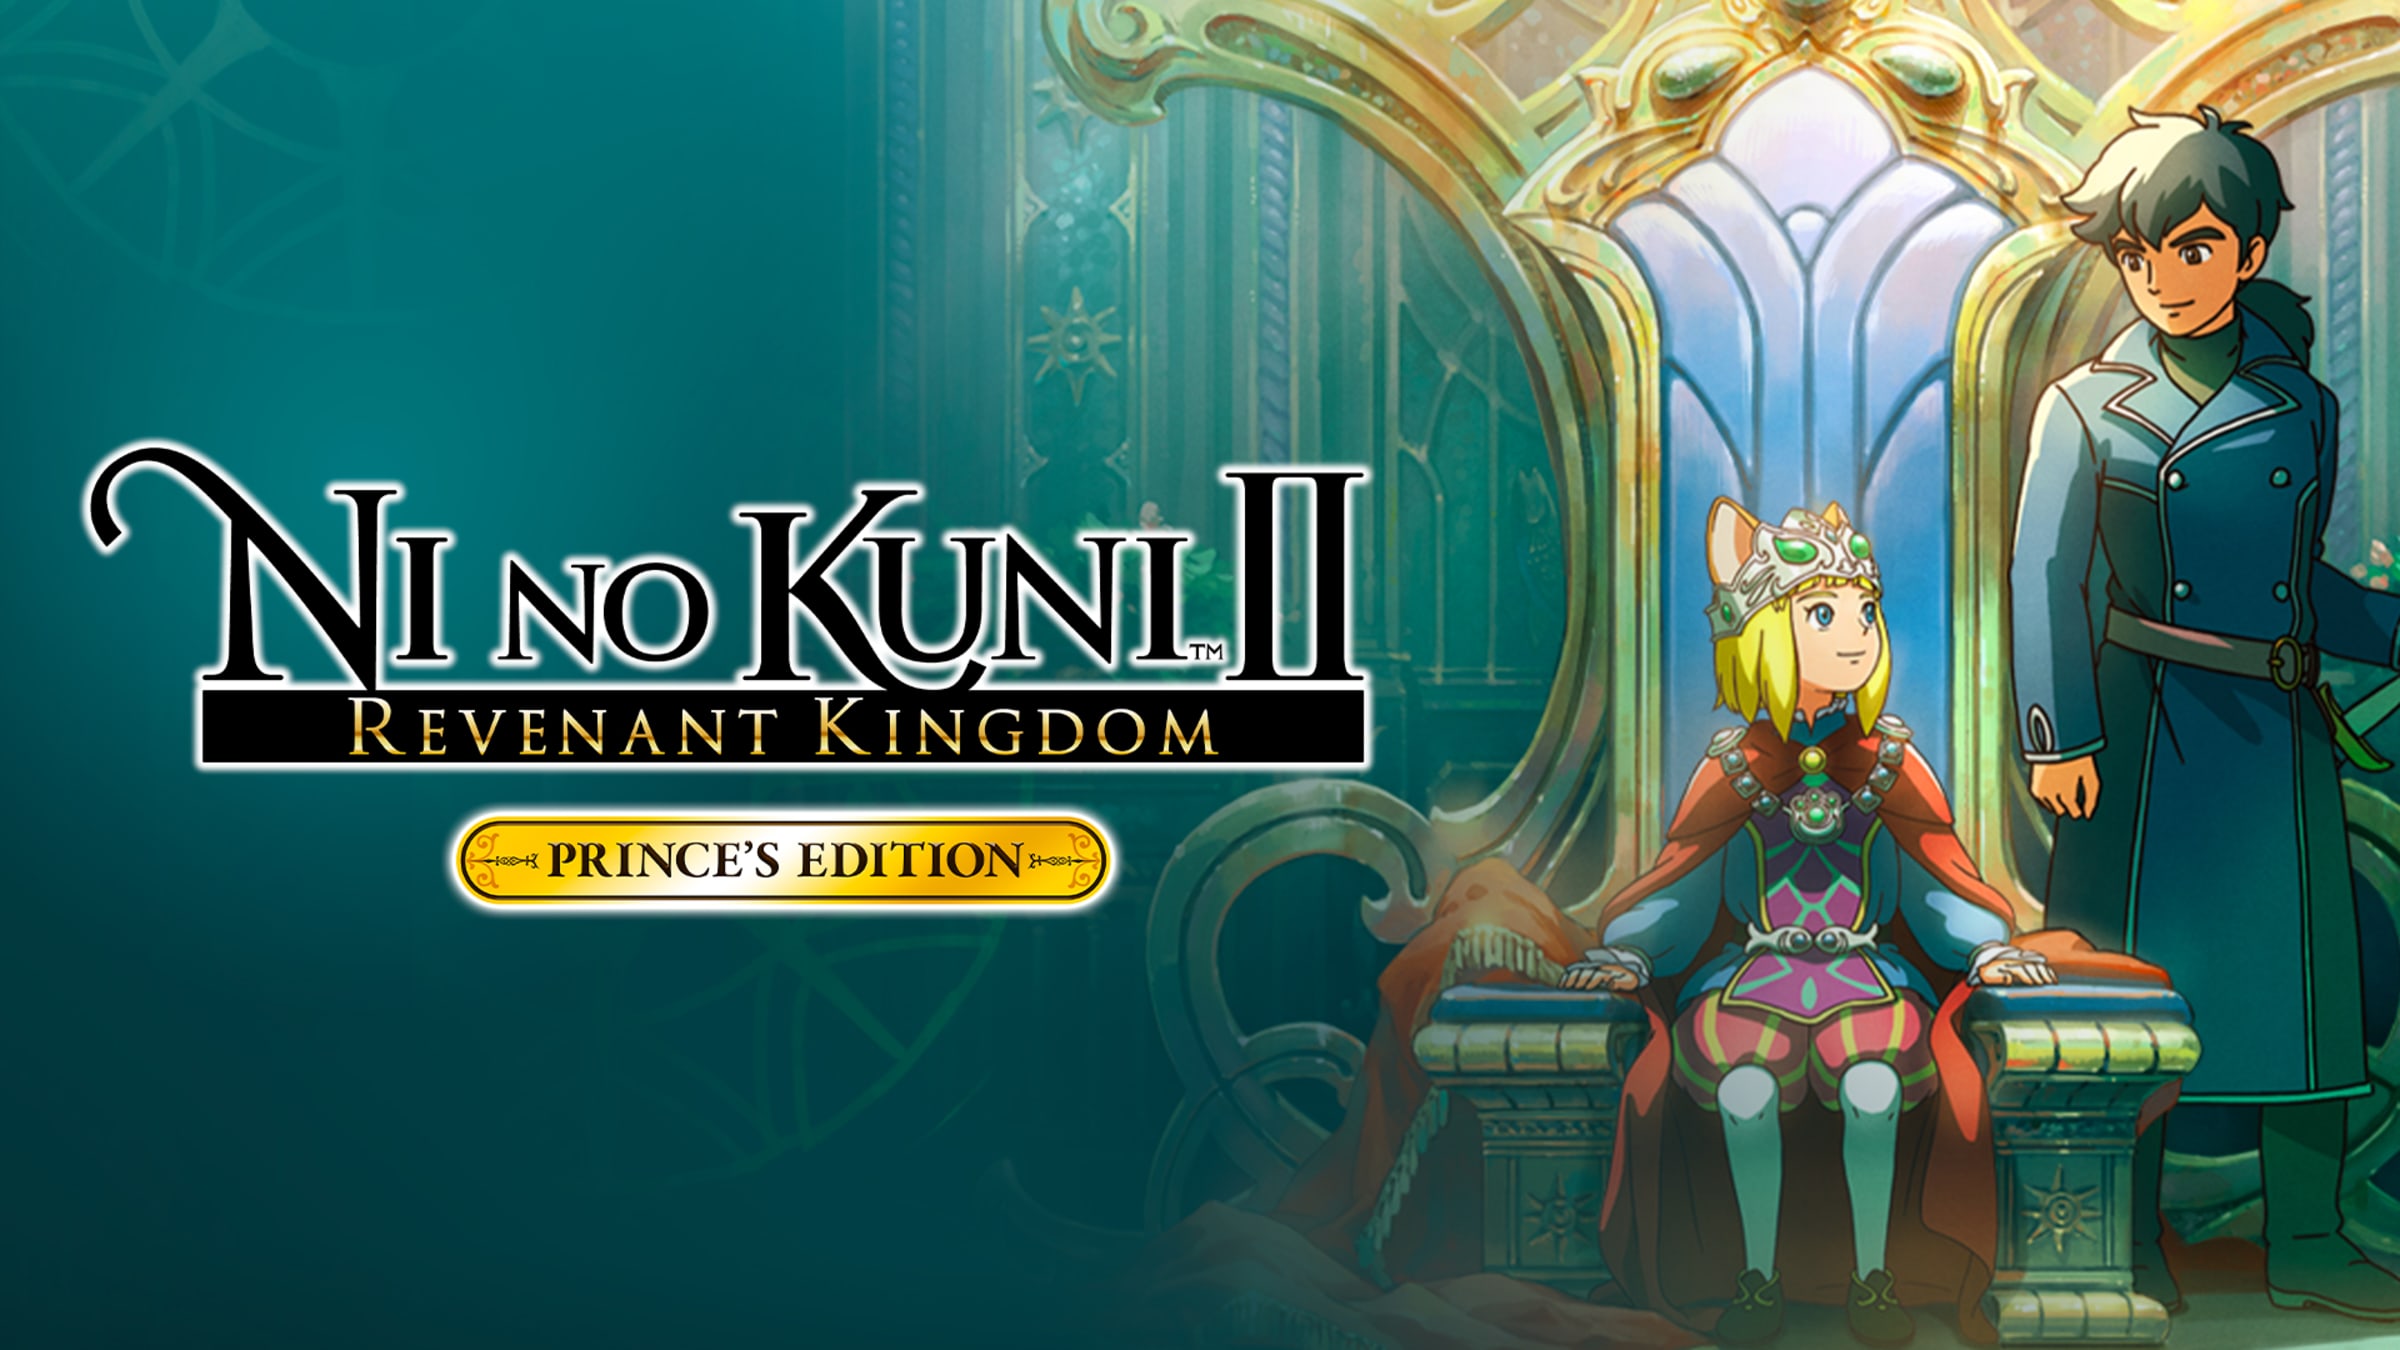 Ni no Kuni II: Revenant Kingdom Prince's Edition (Nintendo Switch Digital Download) $9.60